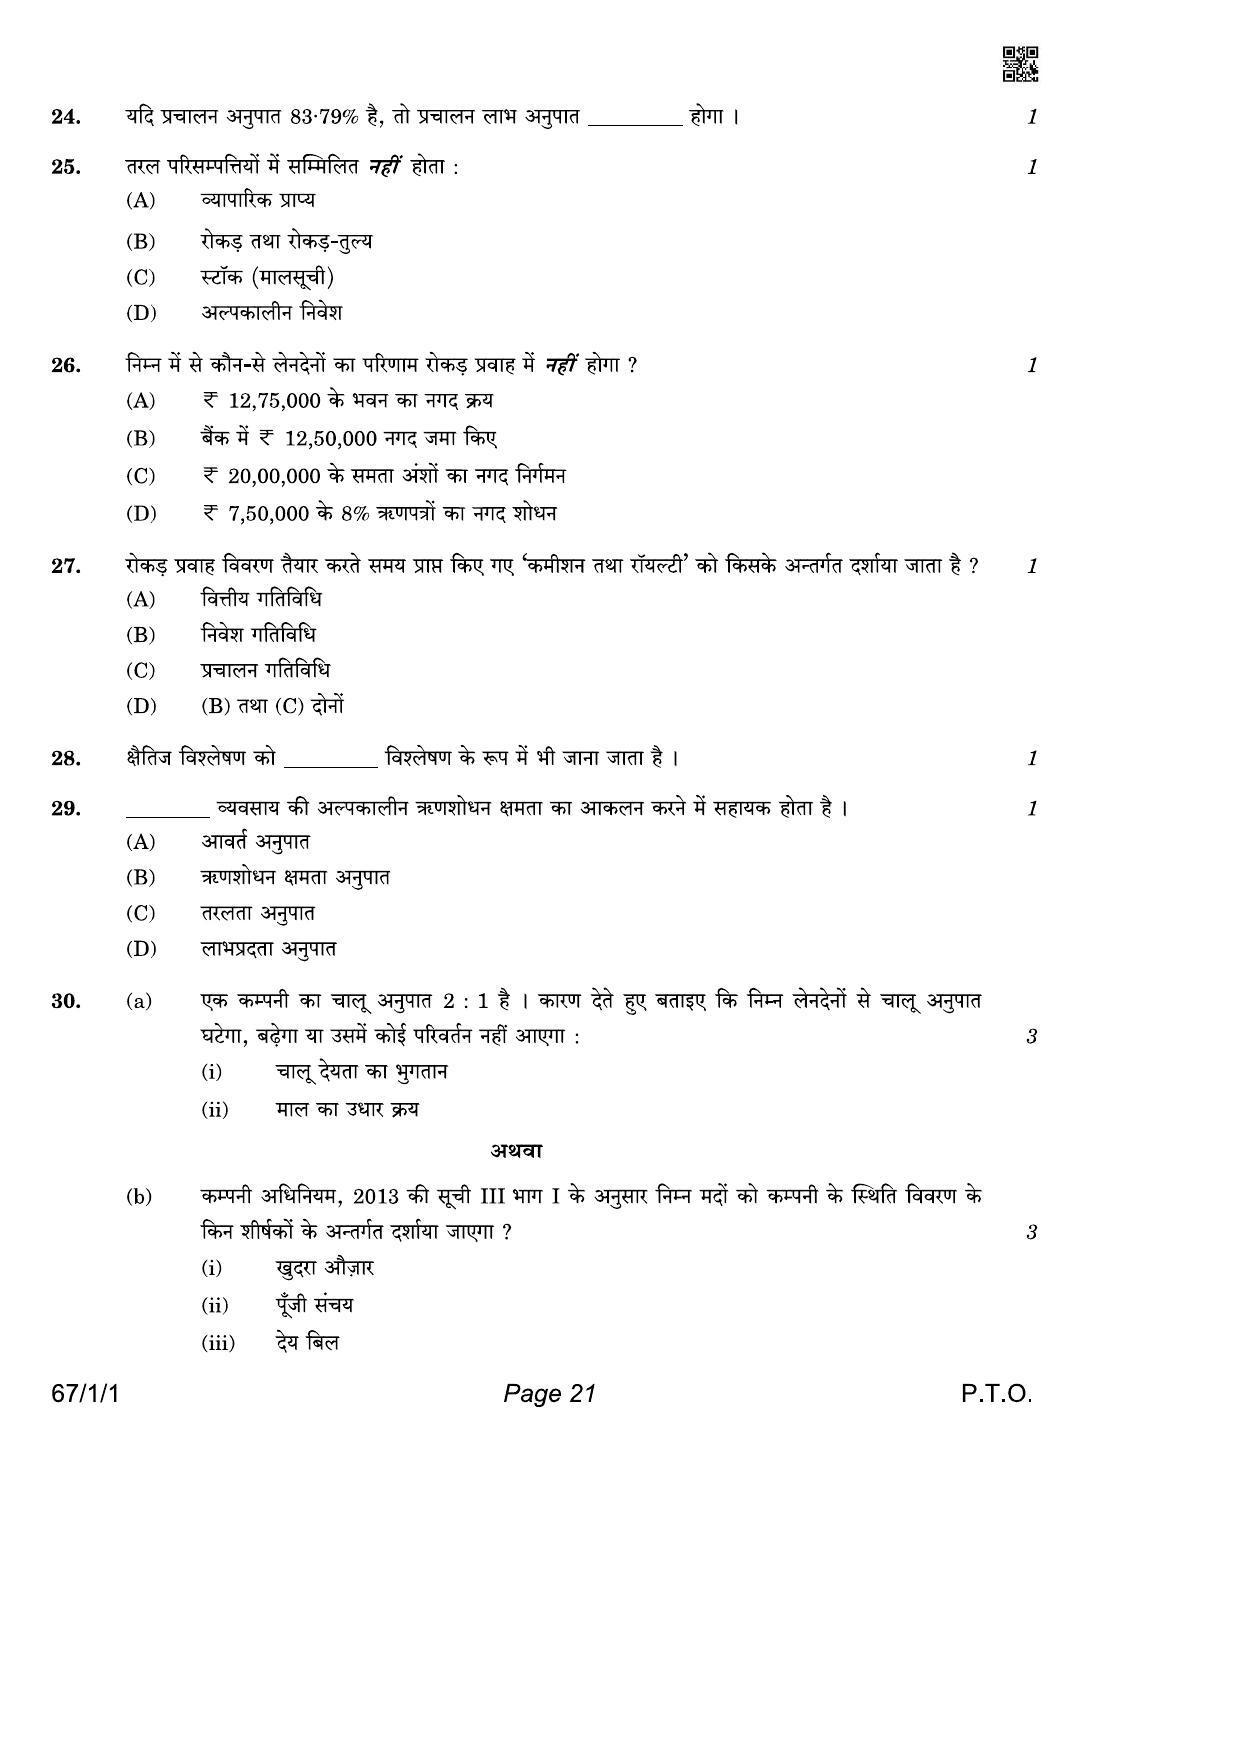 CBSE Class 12 QP_055_Accountancy 2021 Compartment Question Paper - Page 21